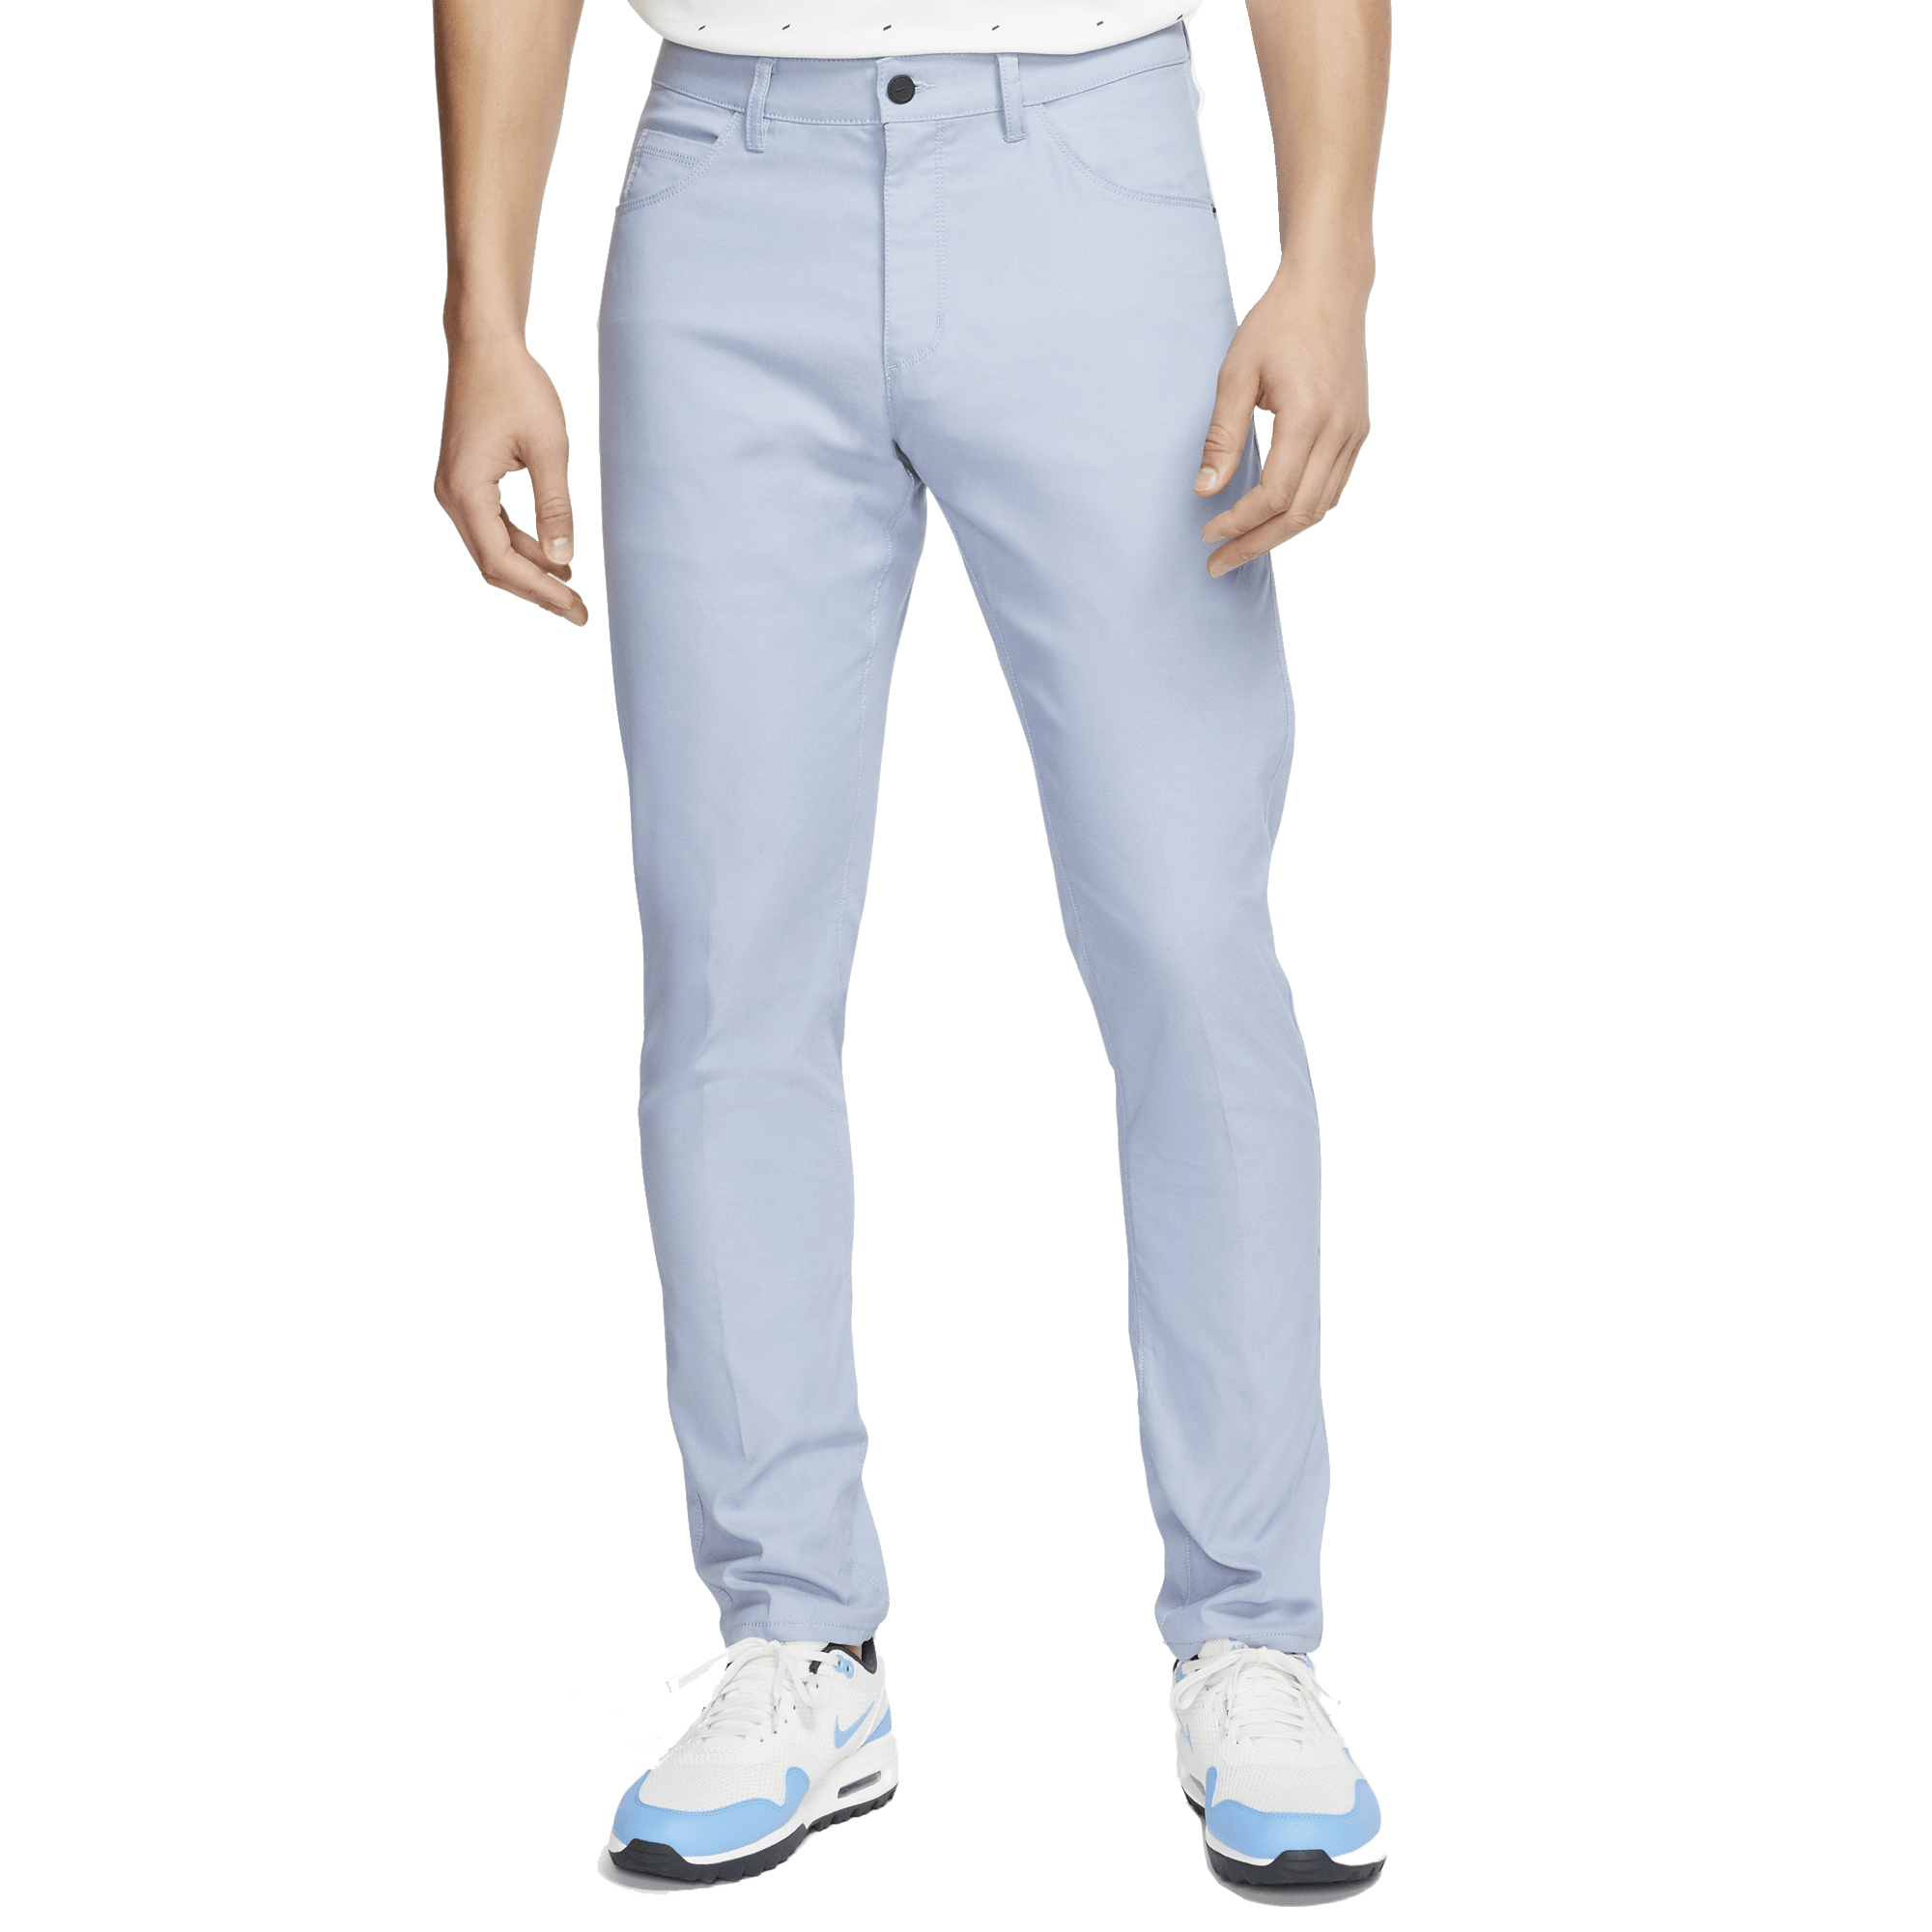 6 pocket golf pants